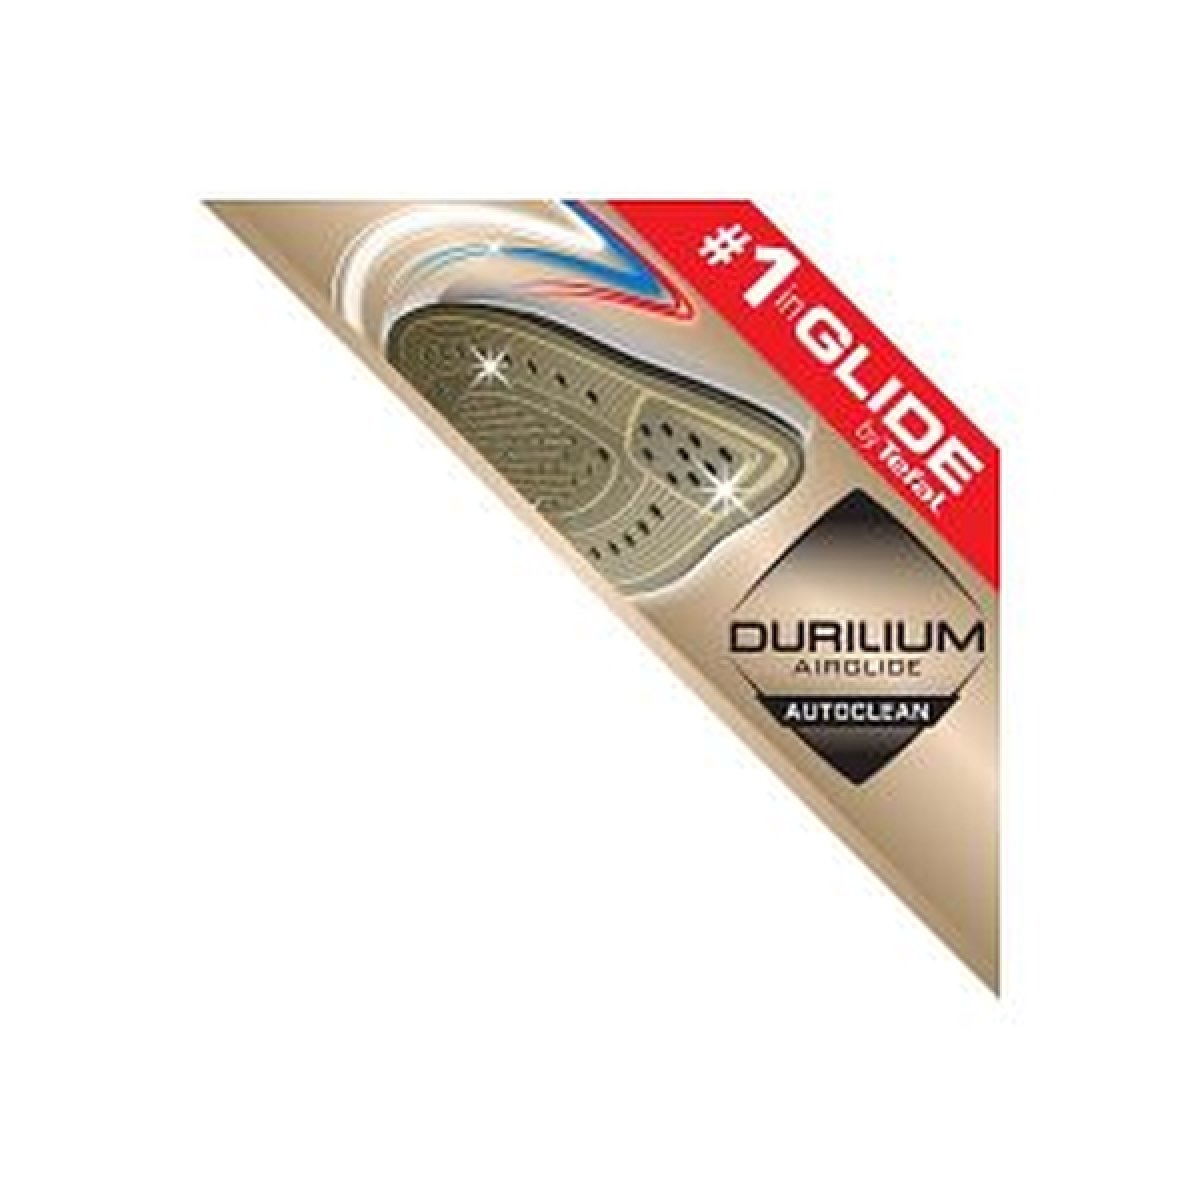 Žehlicí plocha Durilium AirGlide Autoclean: číslo 1 v kluznosti od značky Tefal